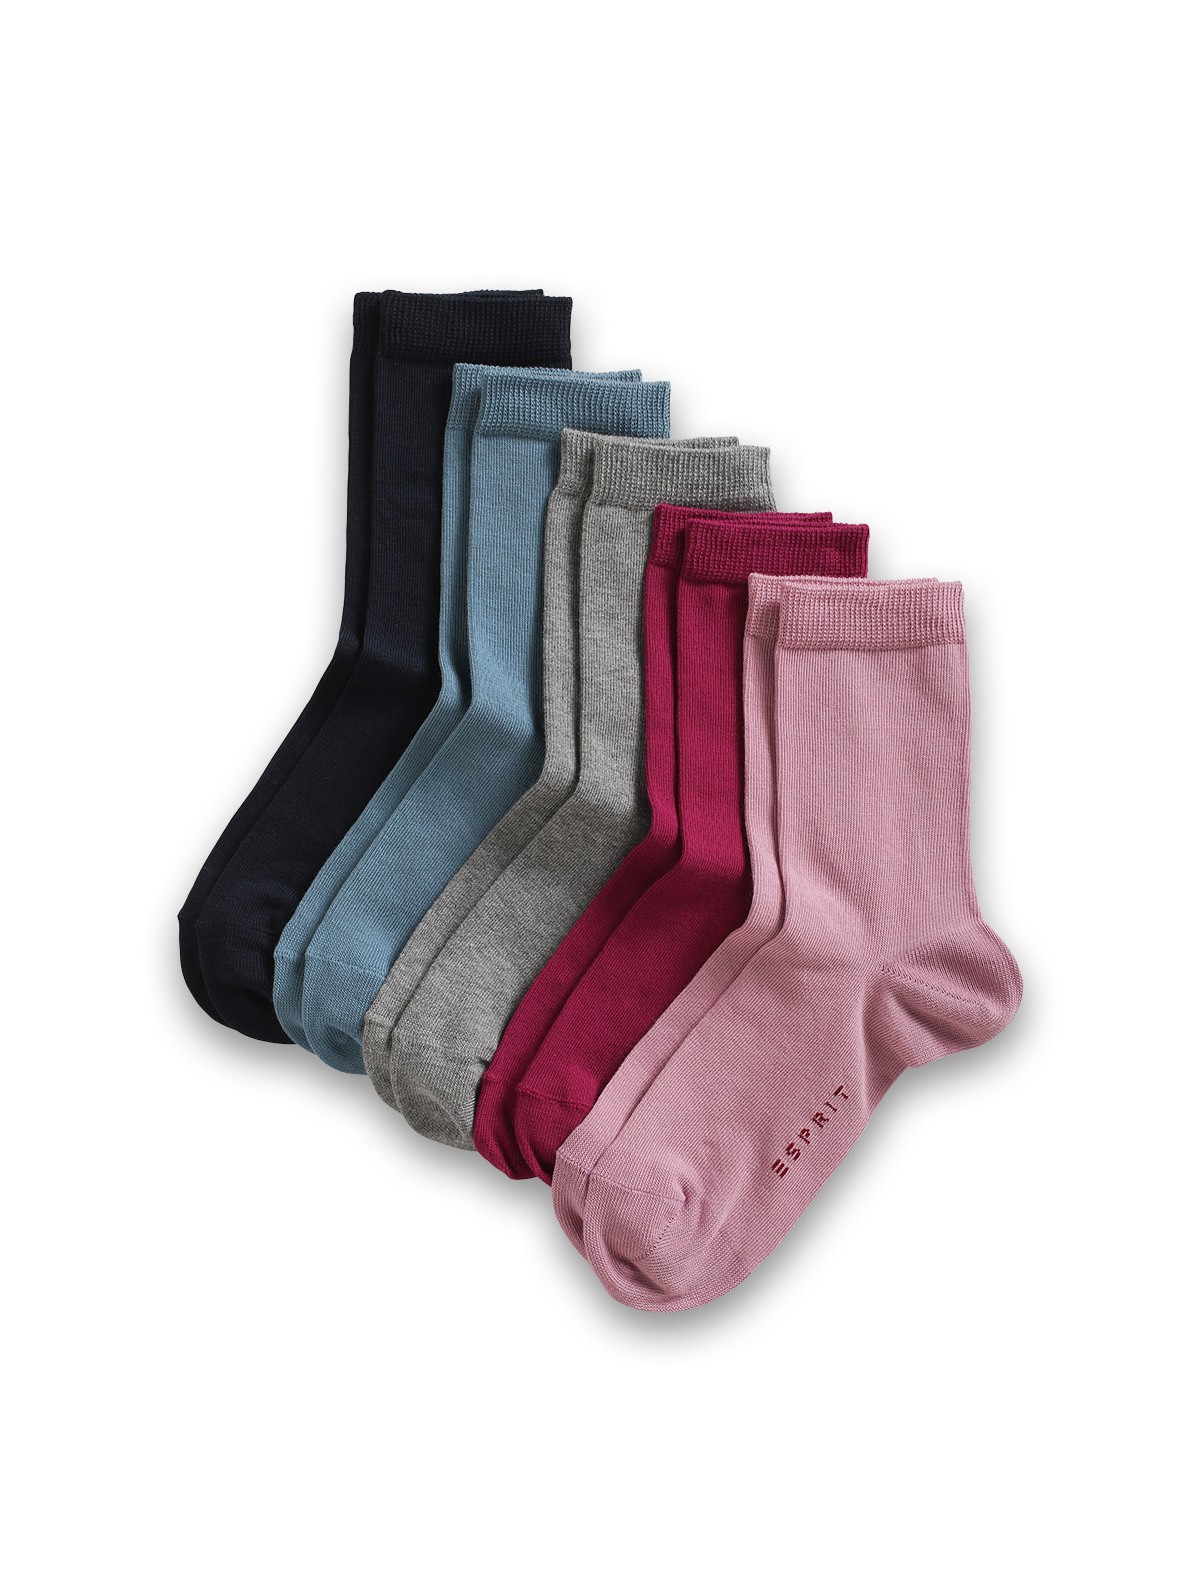 Esprit Kids Essential Socks 5 Pack